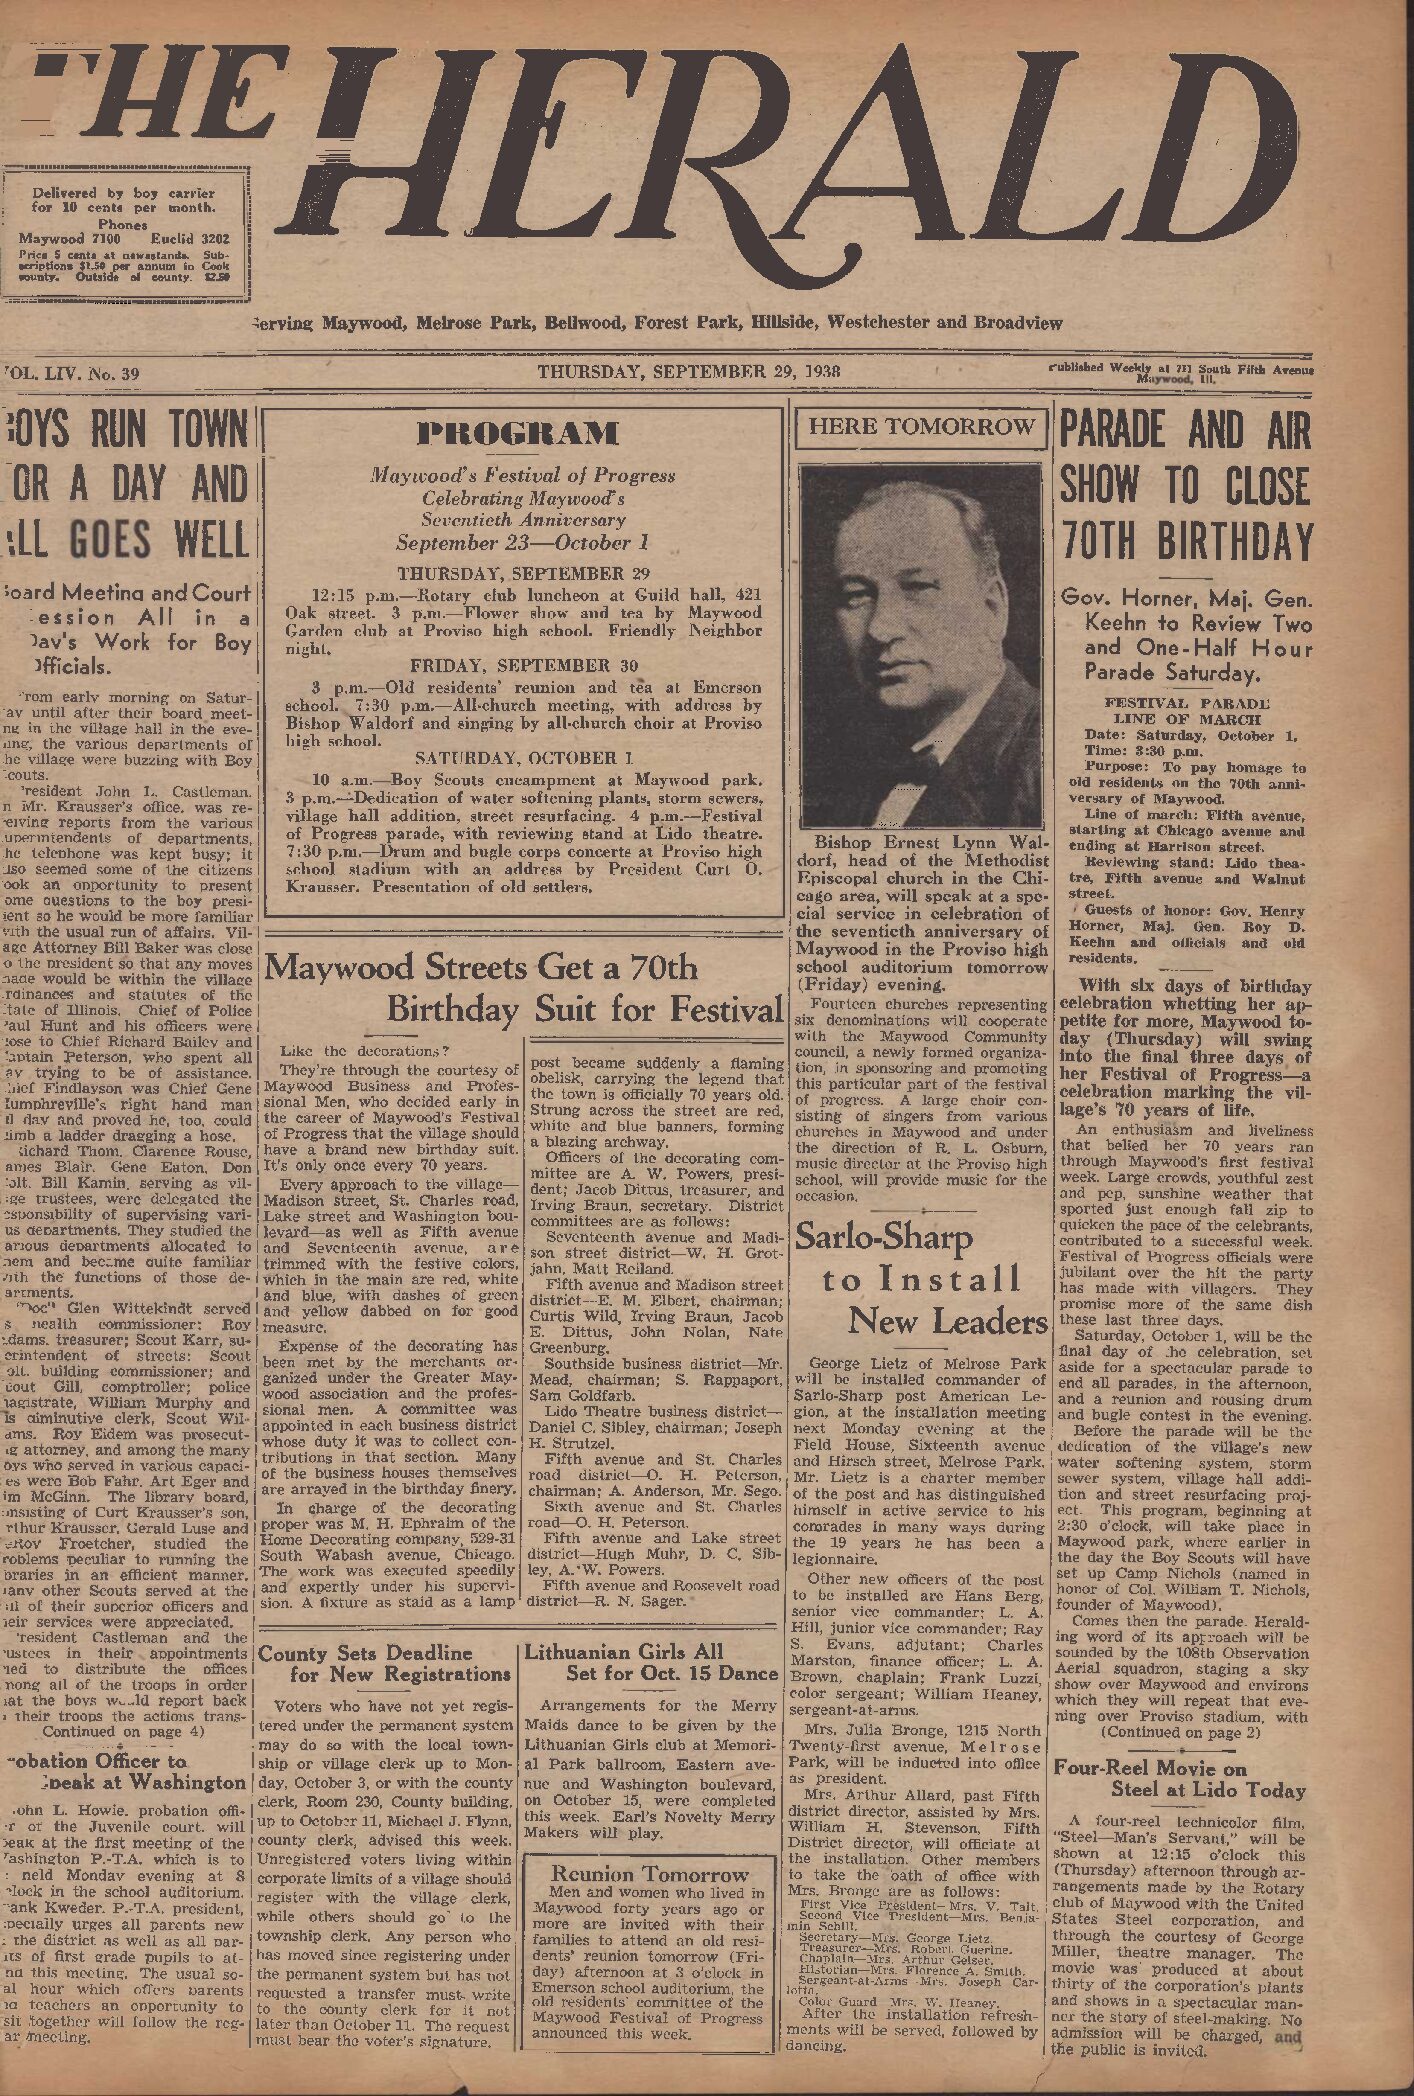 The Herald – 19380929